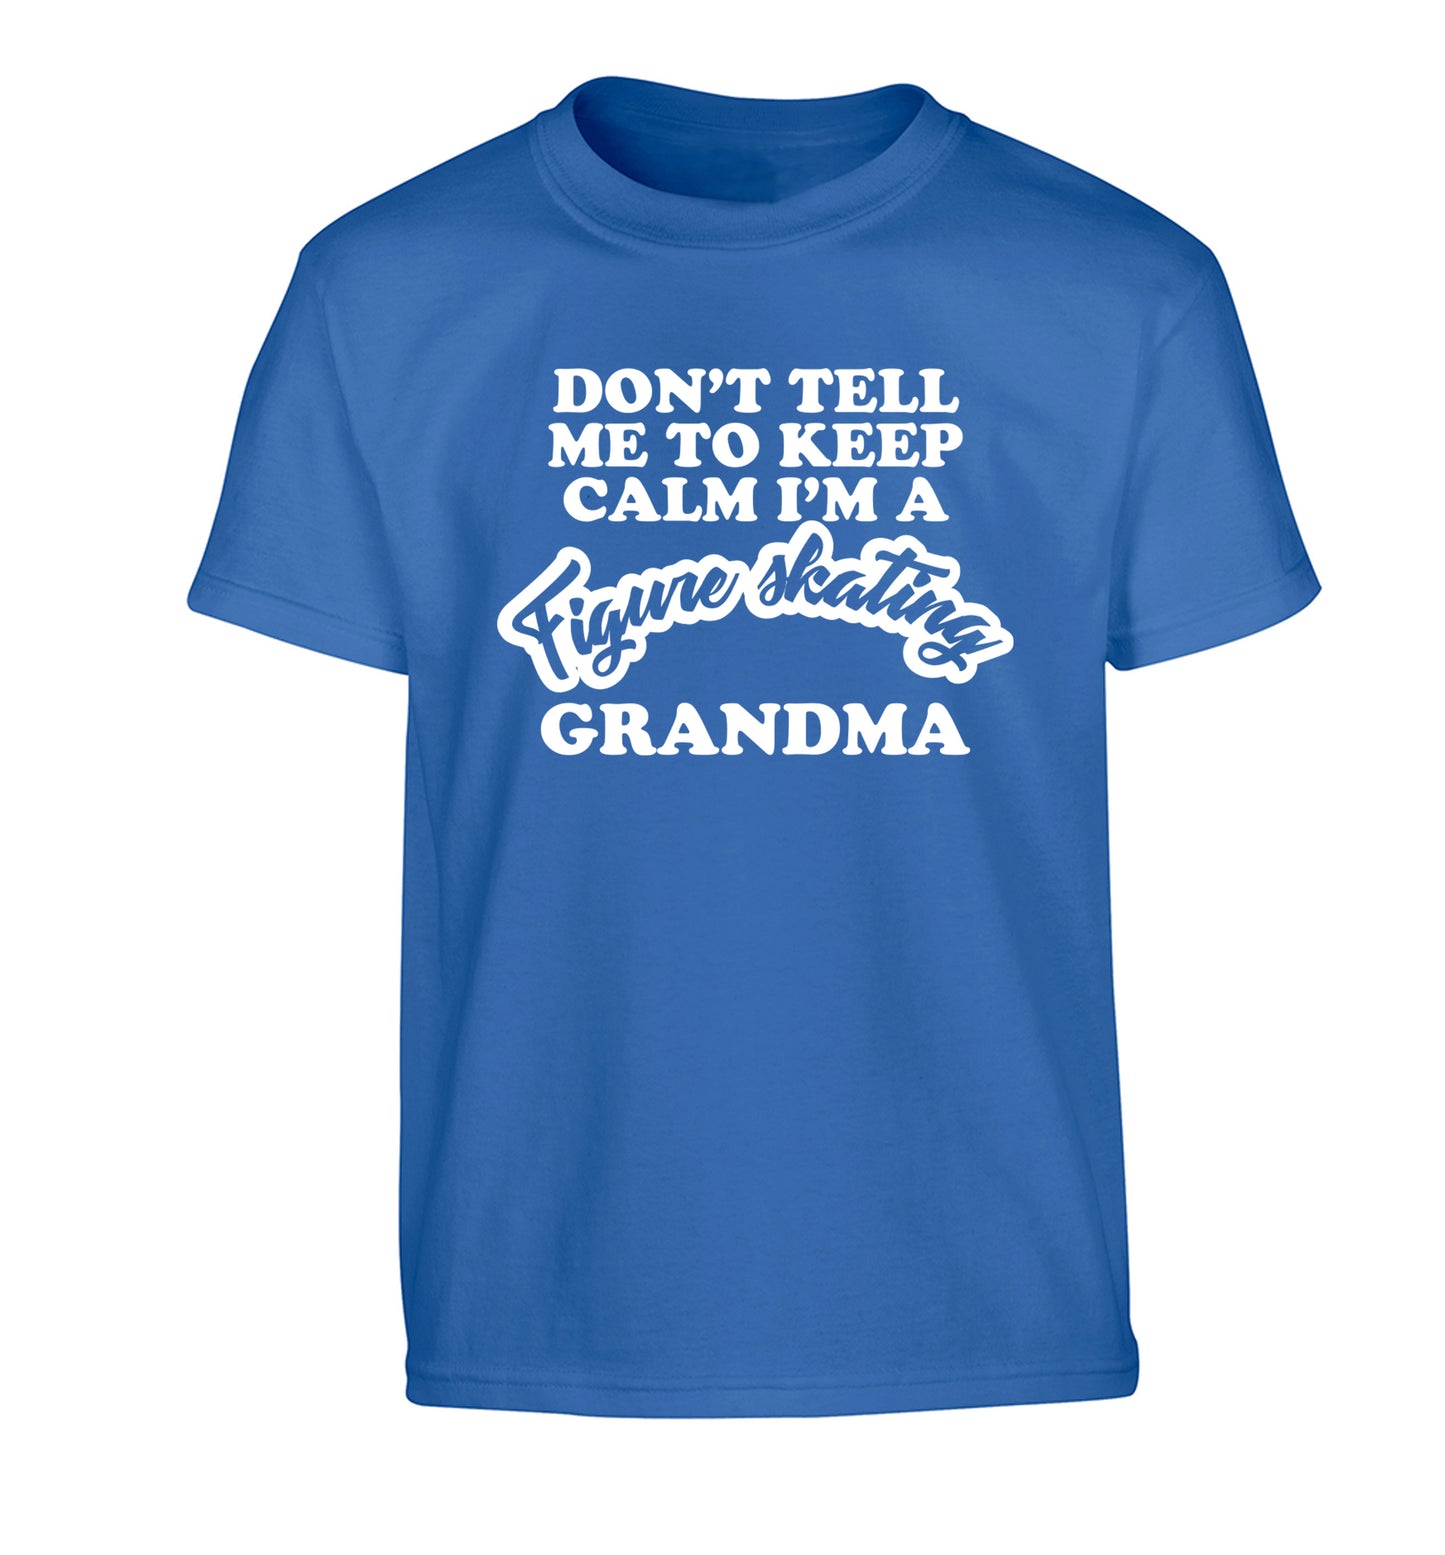 Don't tell me to keep calm I'm a figure skating grandma Children's blue Tshirt 12-14 Years